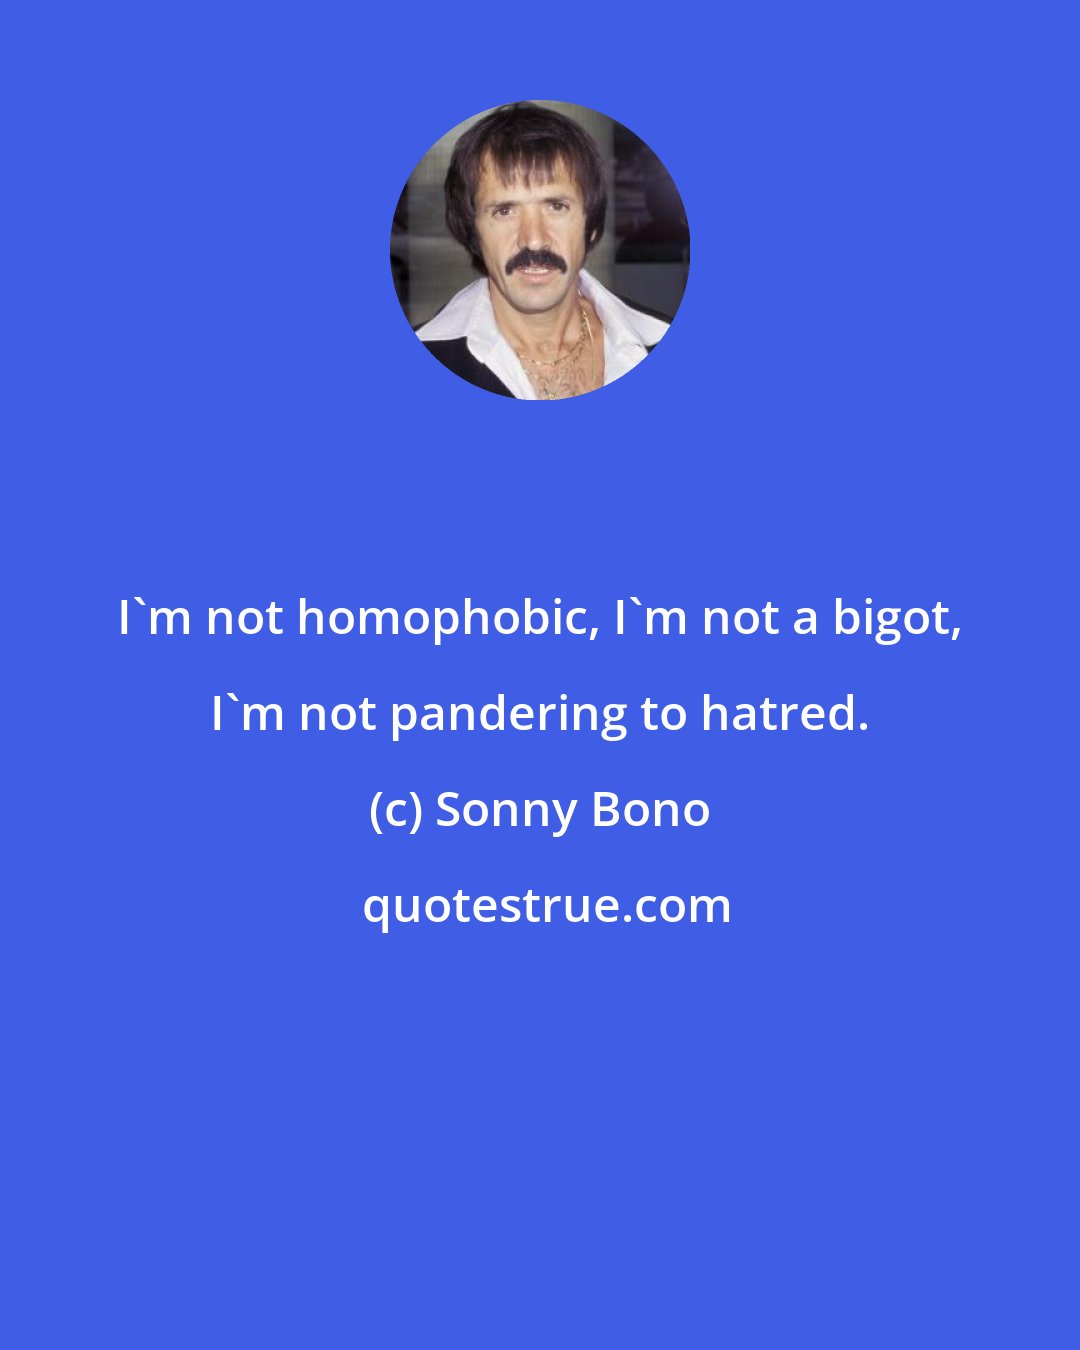 Sonny Bono: I'm not homophobic, I'm not a bigot, I'm not pandering to hatred.